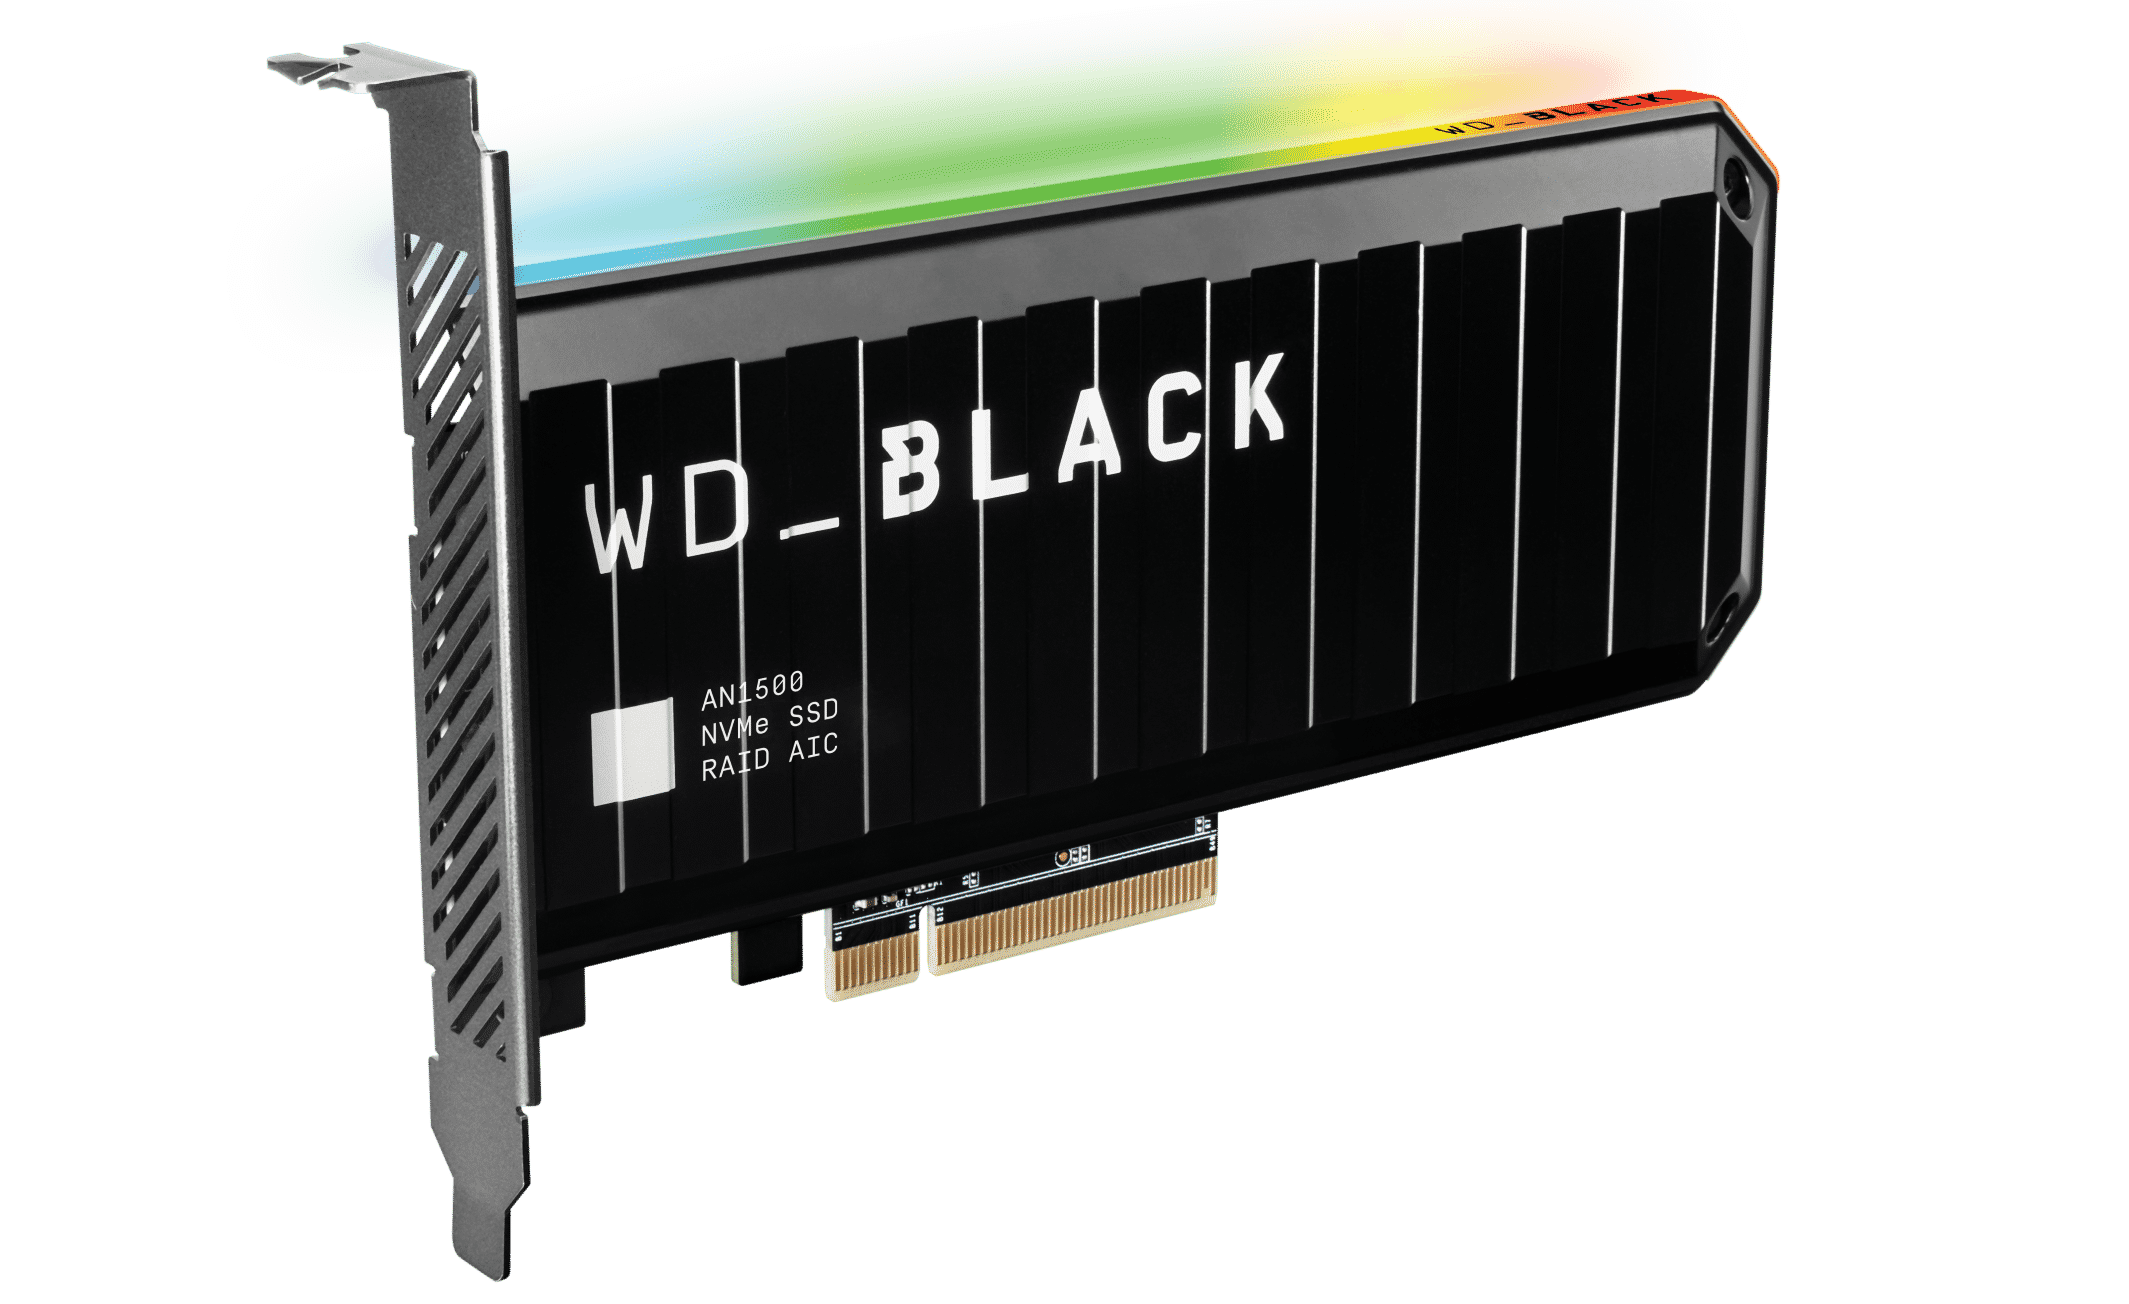 WD_BLACK AN1500 NVMe SSD Add-in-Card 